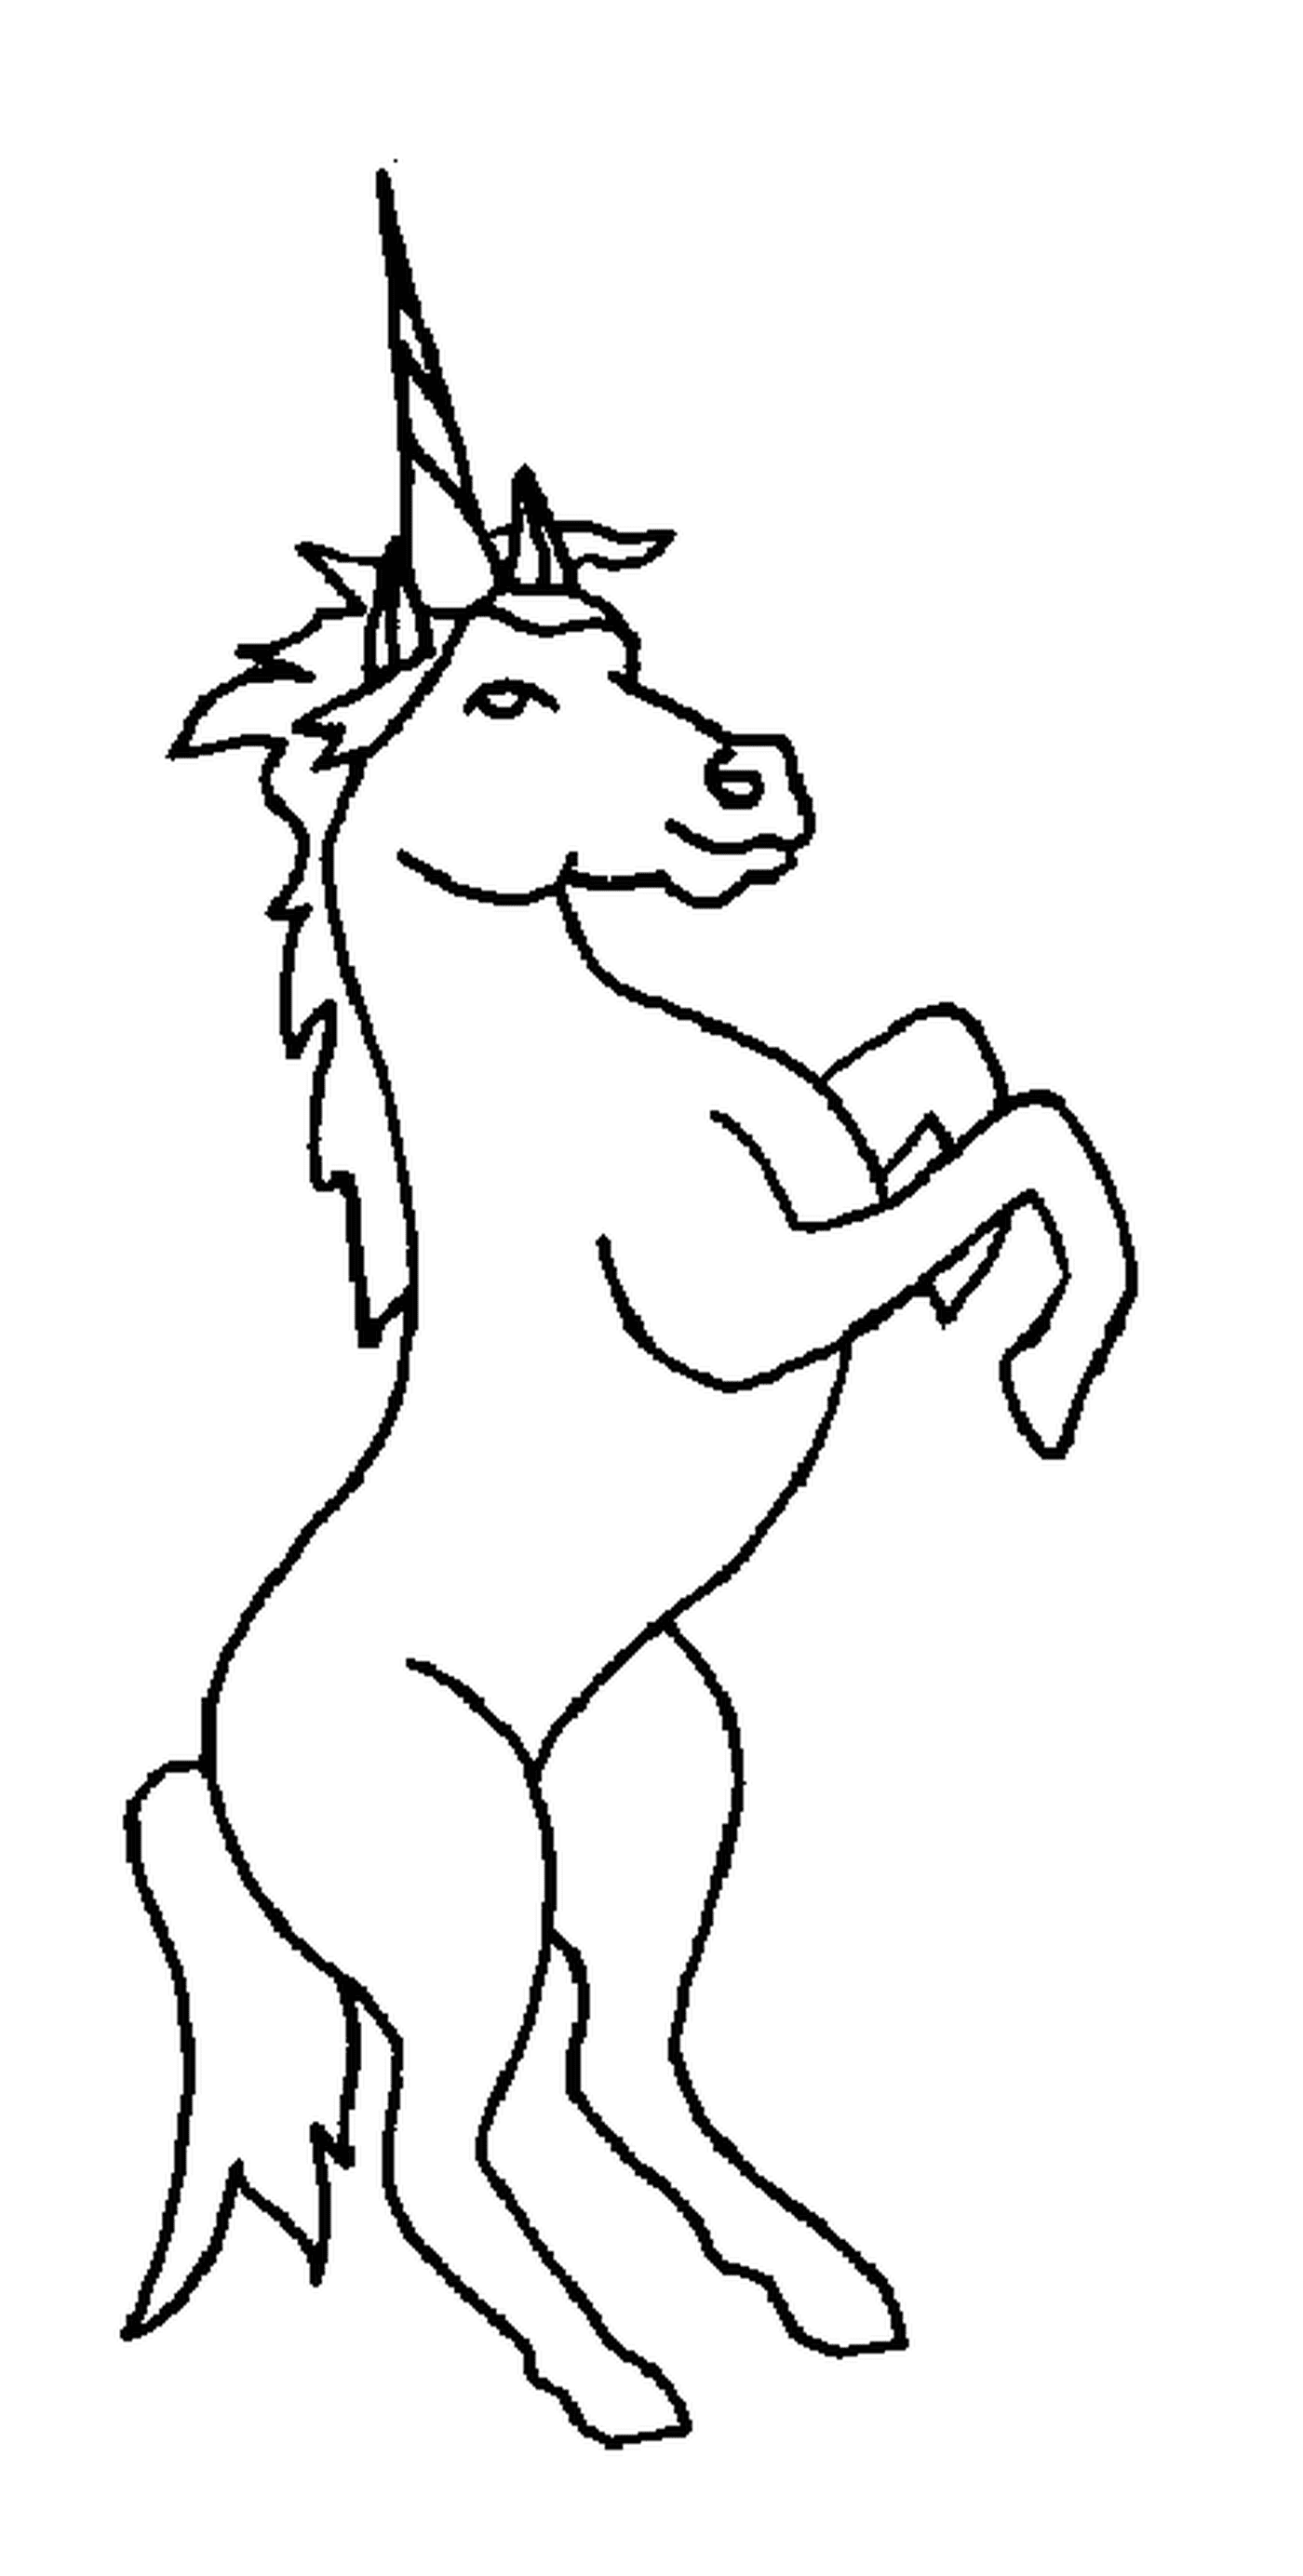  unicorn standing on hind legs 